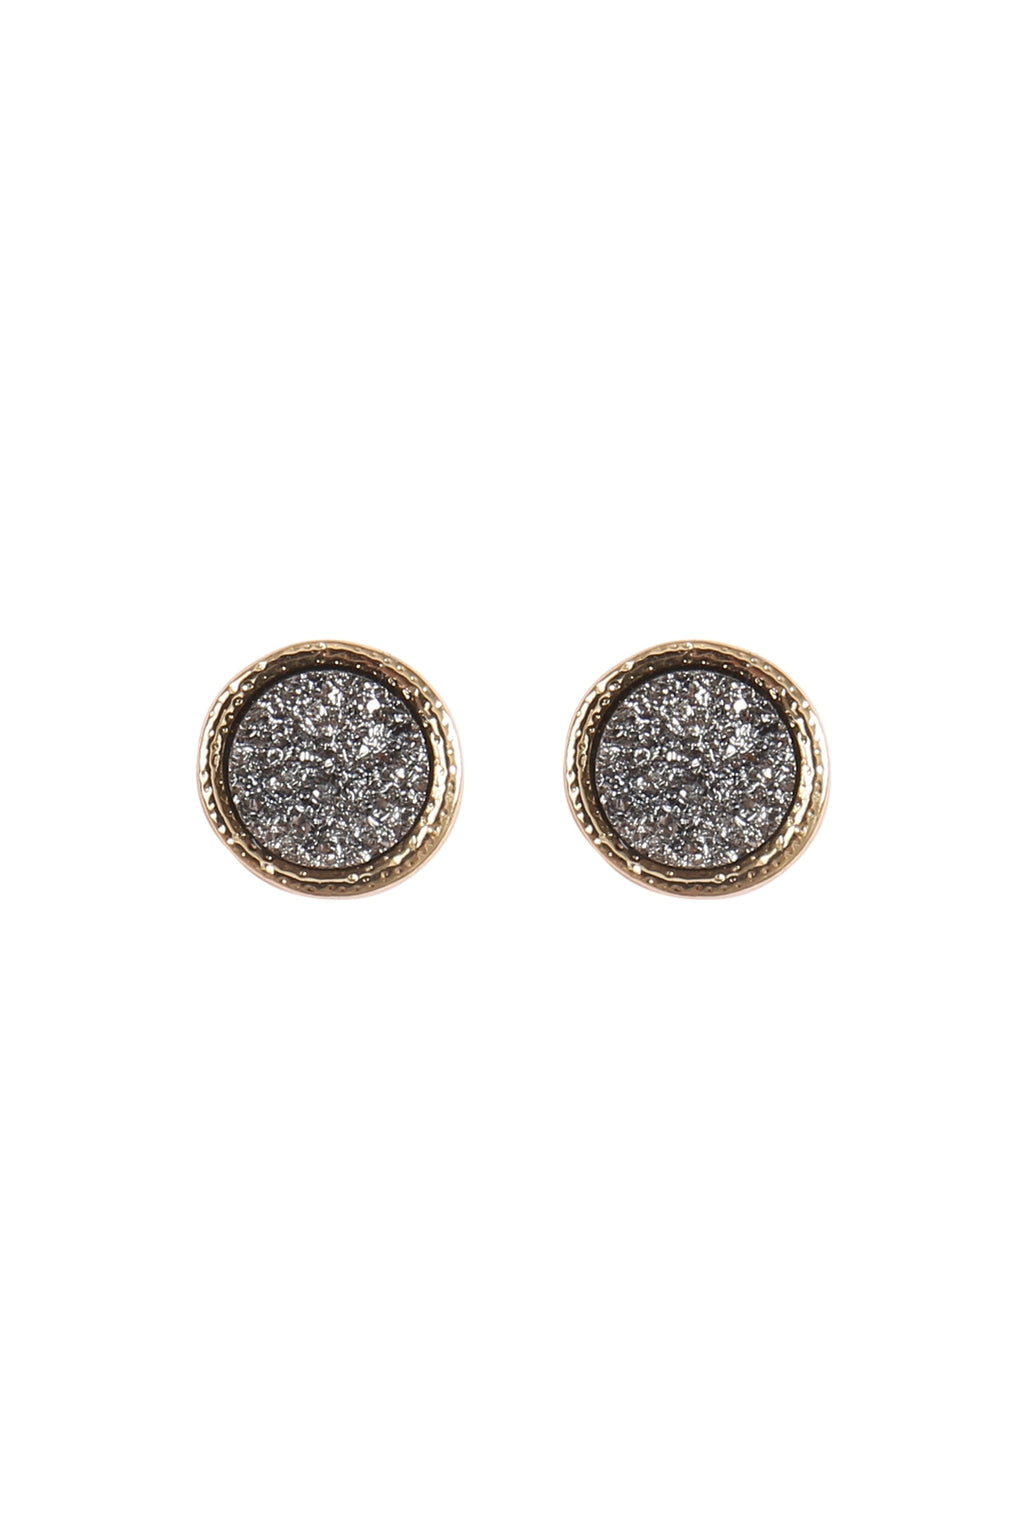 Round Druzy Stone Post Earrings Gold Hematite - Pack of 6